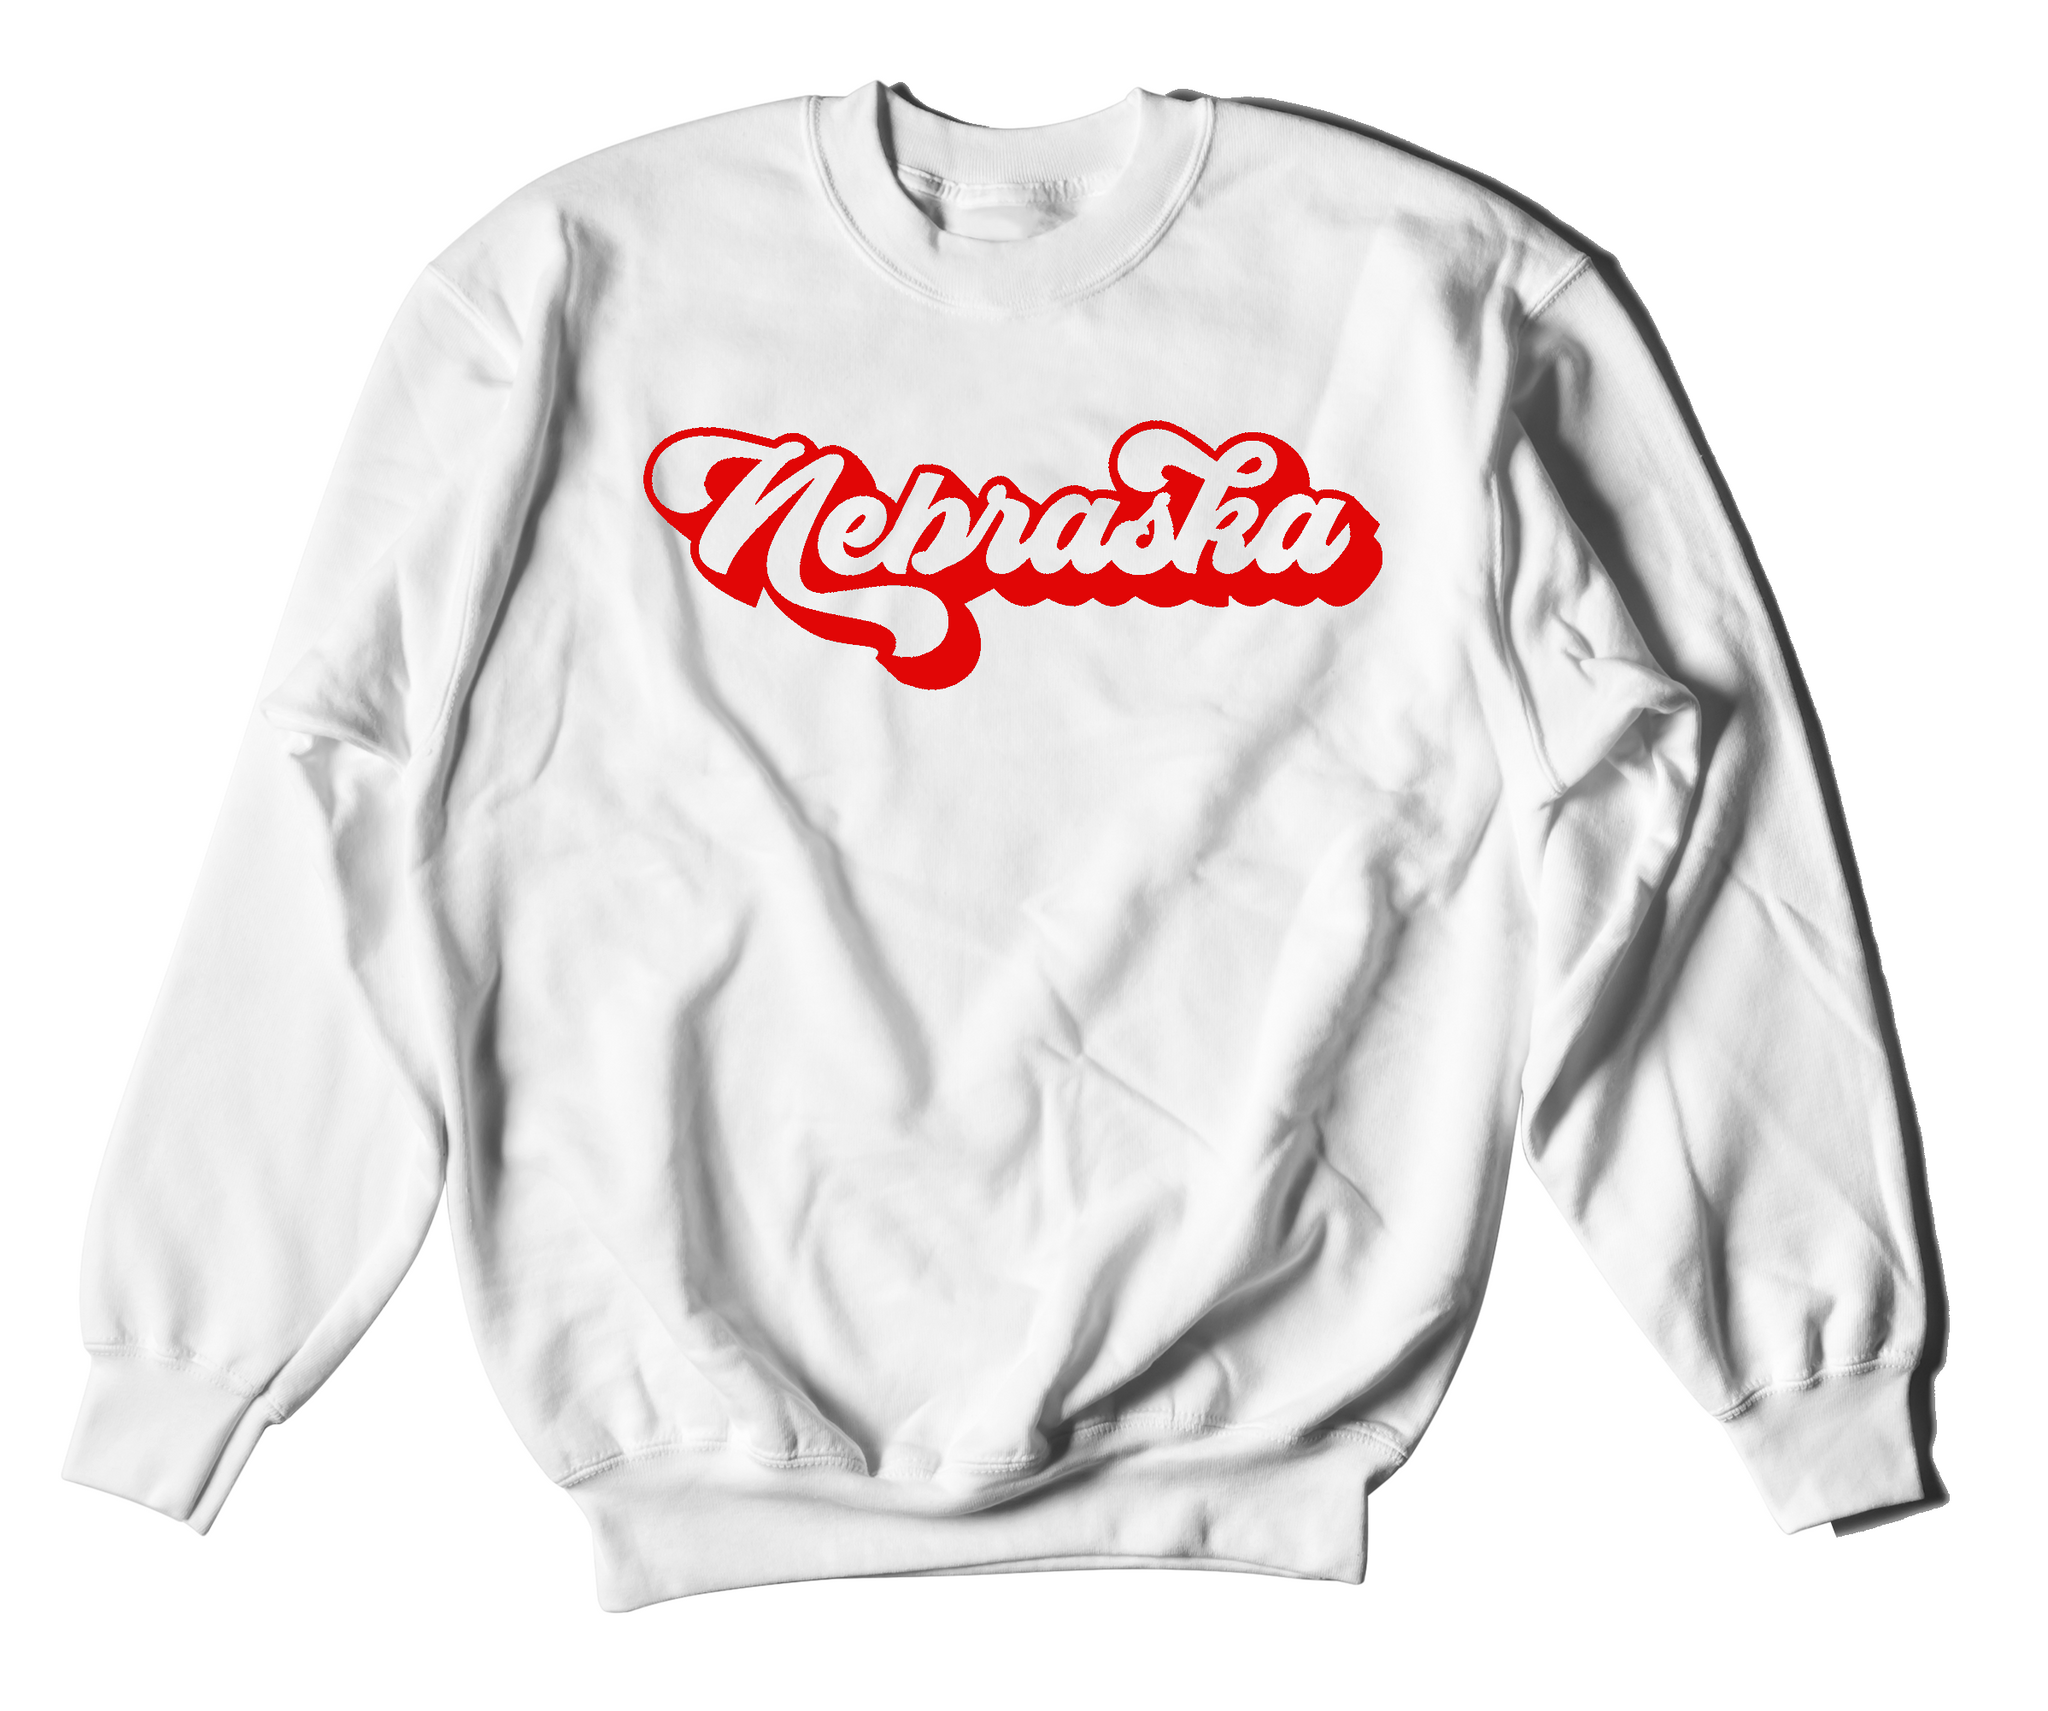 White retro nebraska crewneck sweater